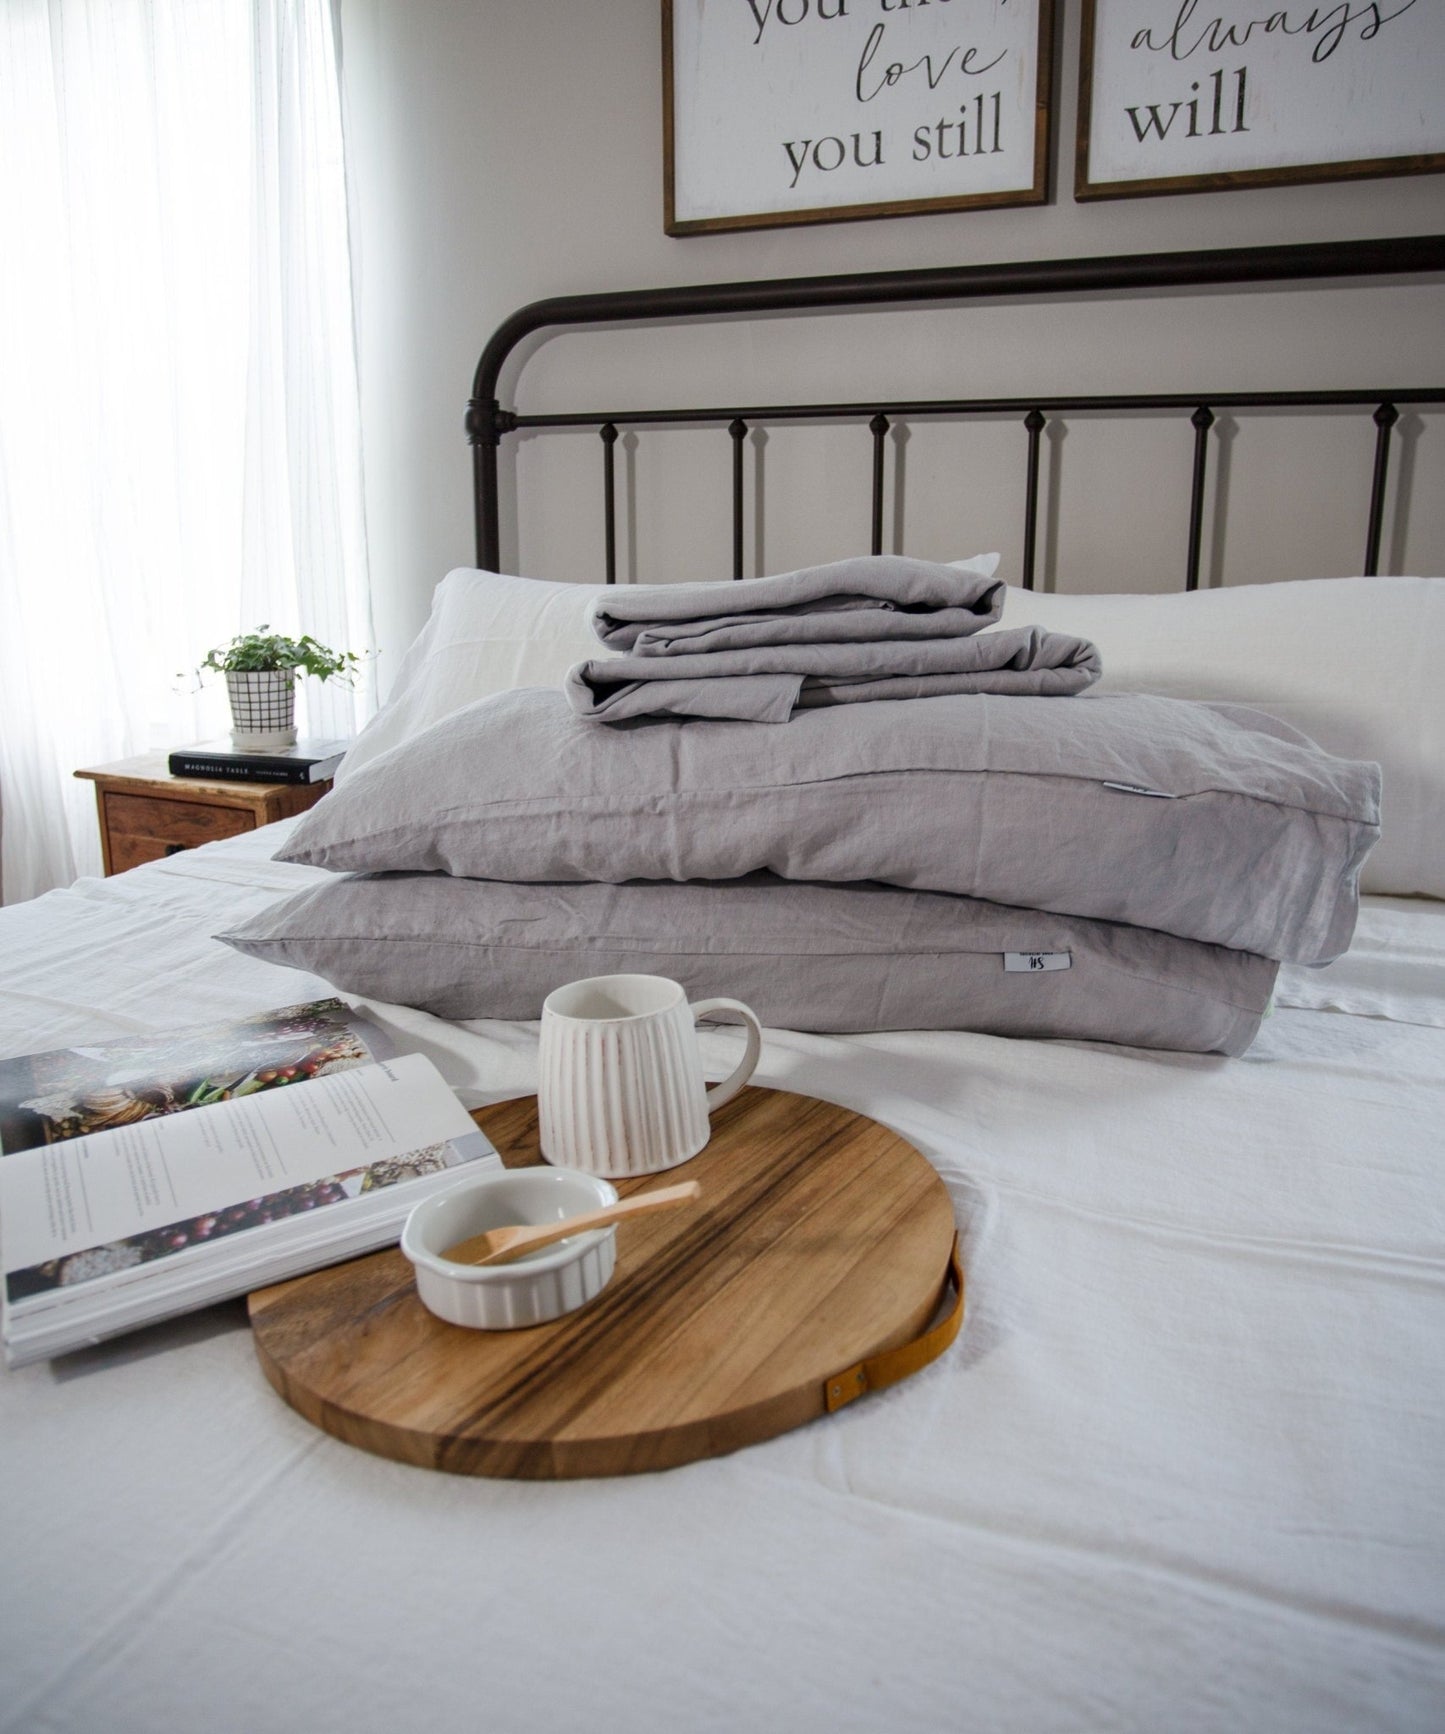 Linen Bedding Sheets Set in Light Grey Color | Natural King Queen Soft Linen Bedding Sheets | Farmhouse Bedding Home Bedroom Decor Linen Set